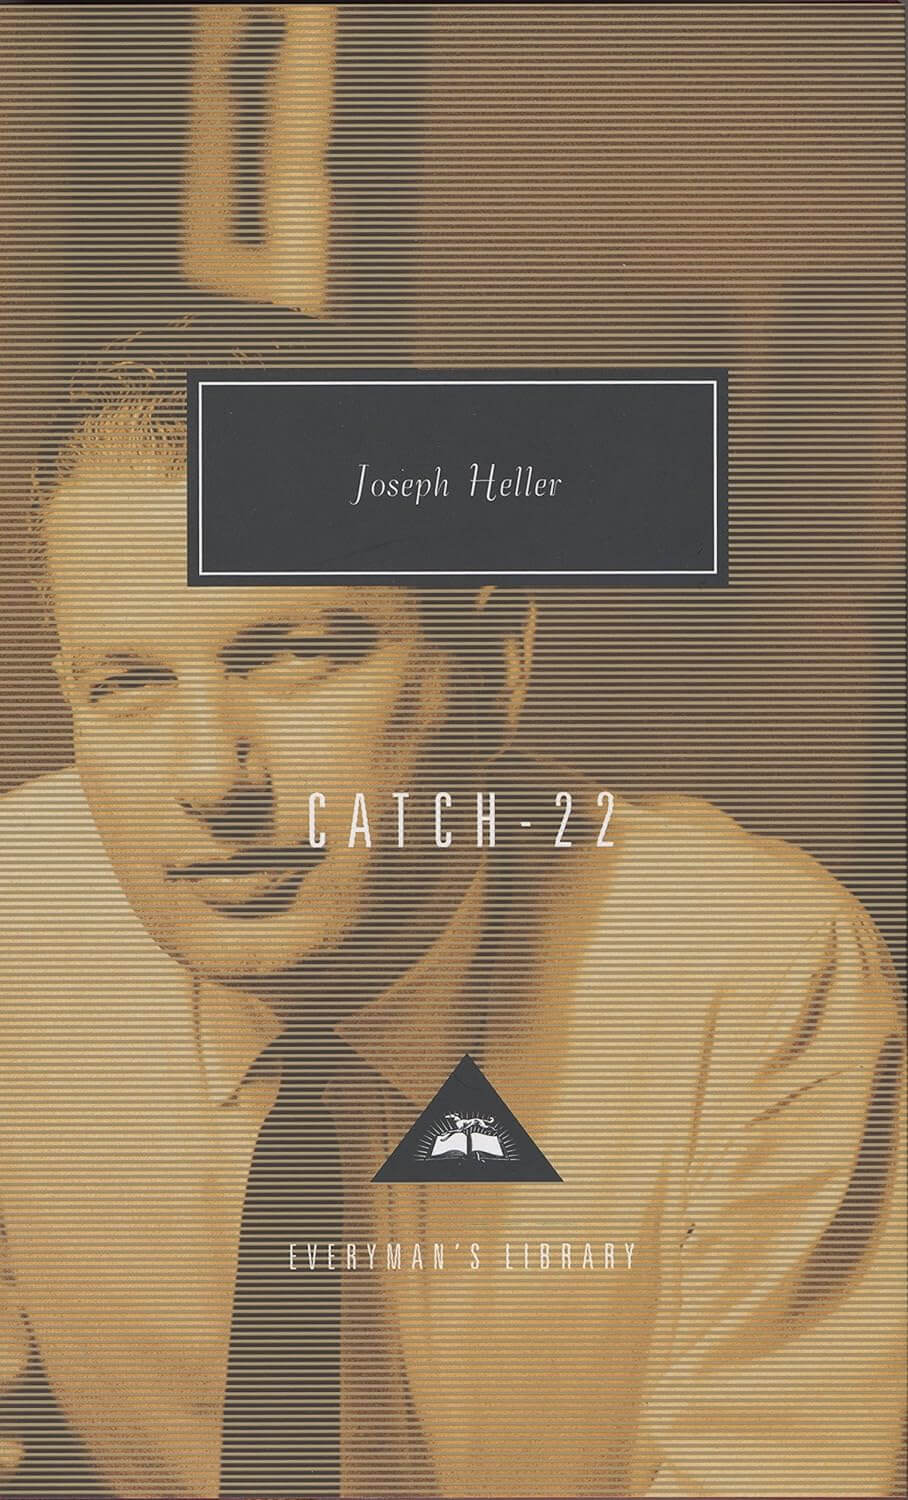 "Catch-22" by Joseph Heller